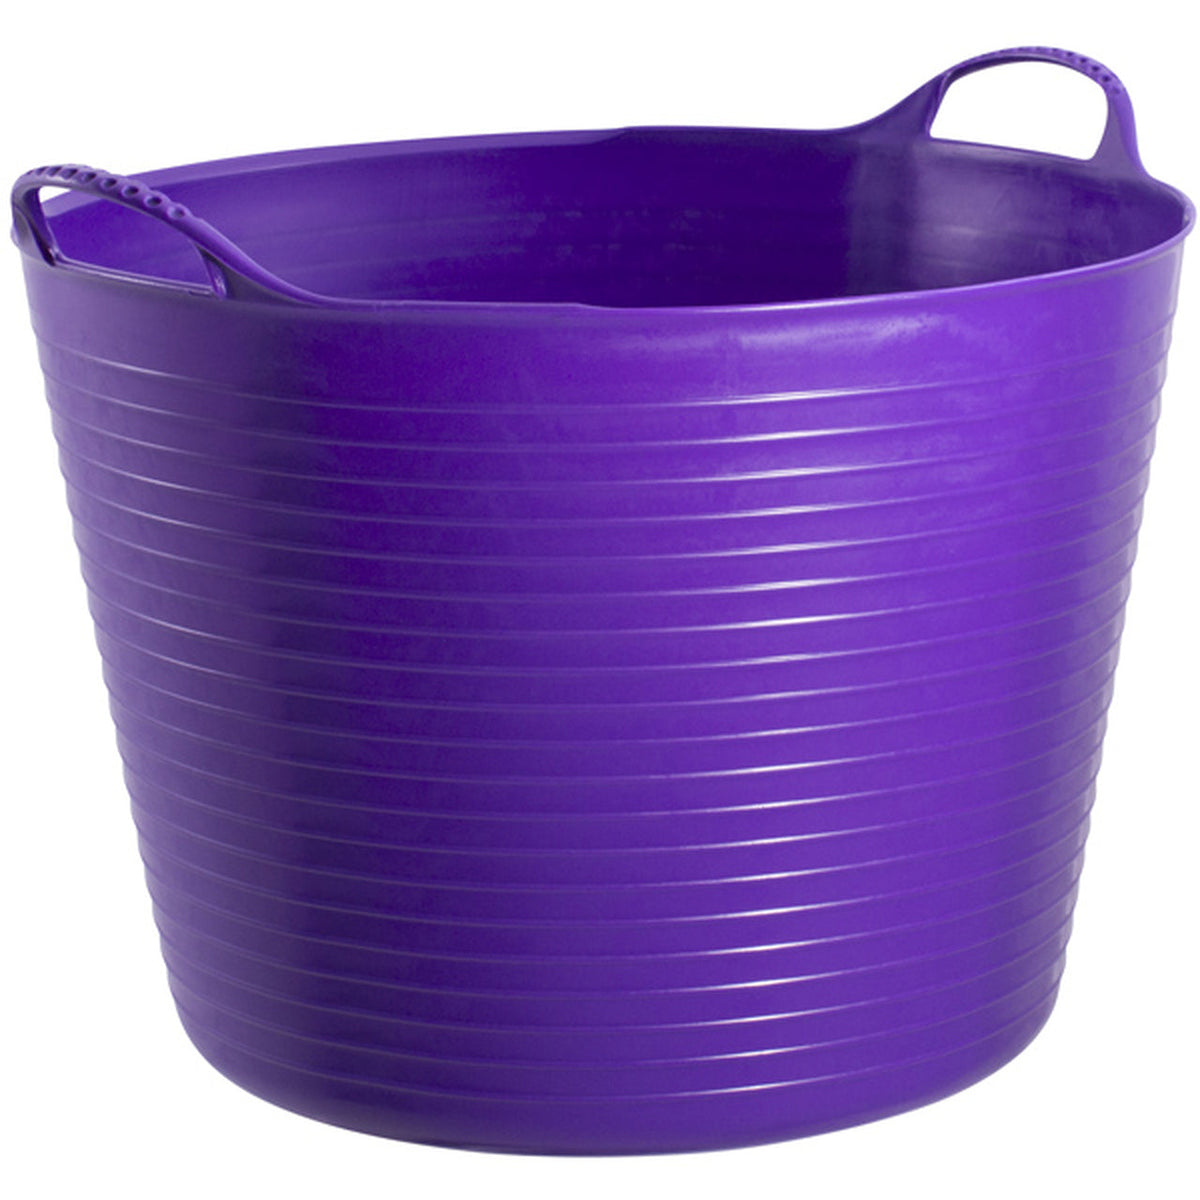 Deep Purple bucket